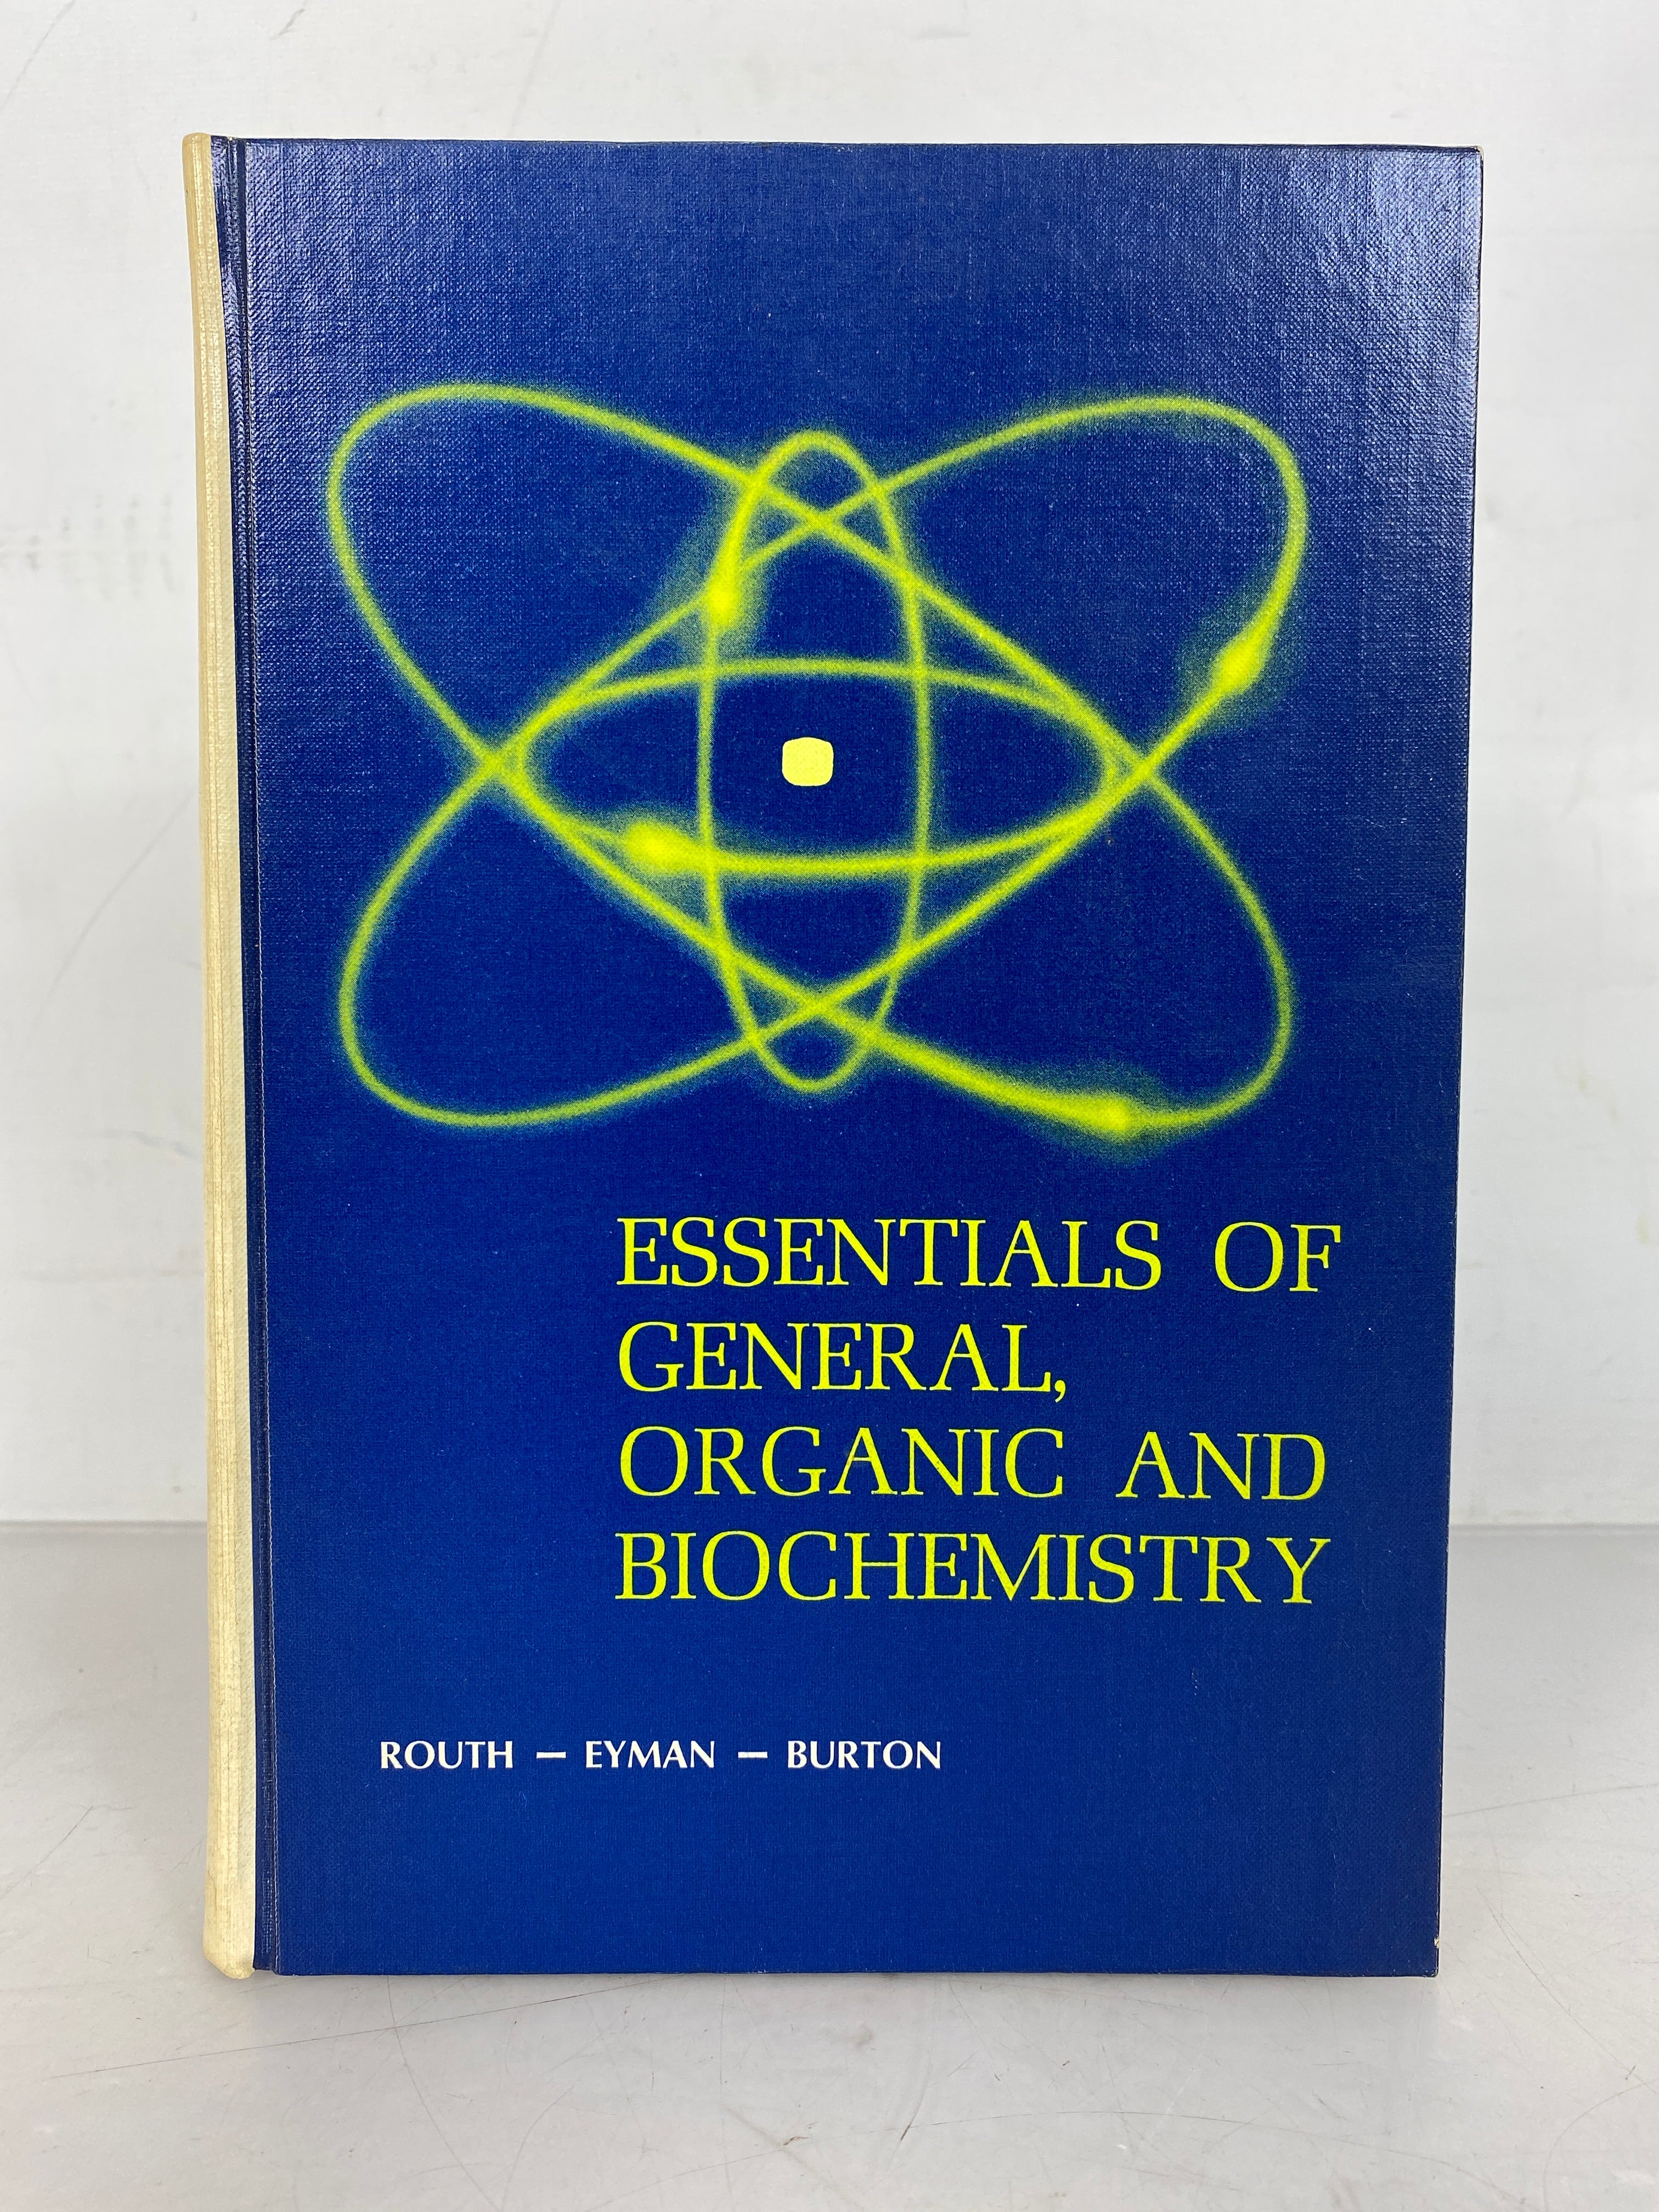 Vintage Chemistry Textbook: Essentials of General, Organic and Biochemistry 1969 W.B. Saunders Company HC